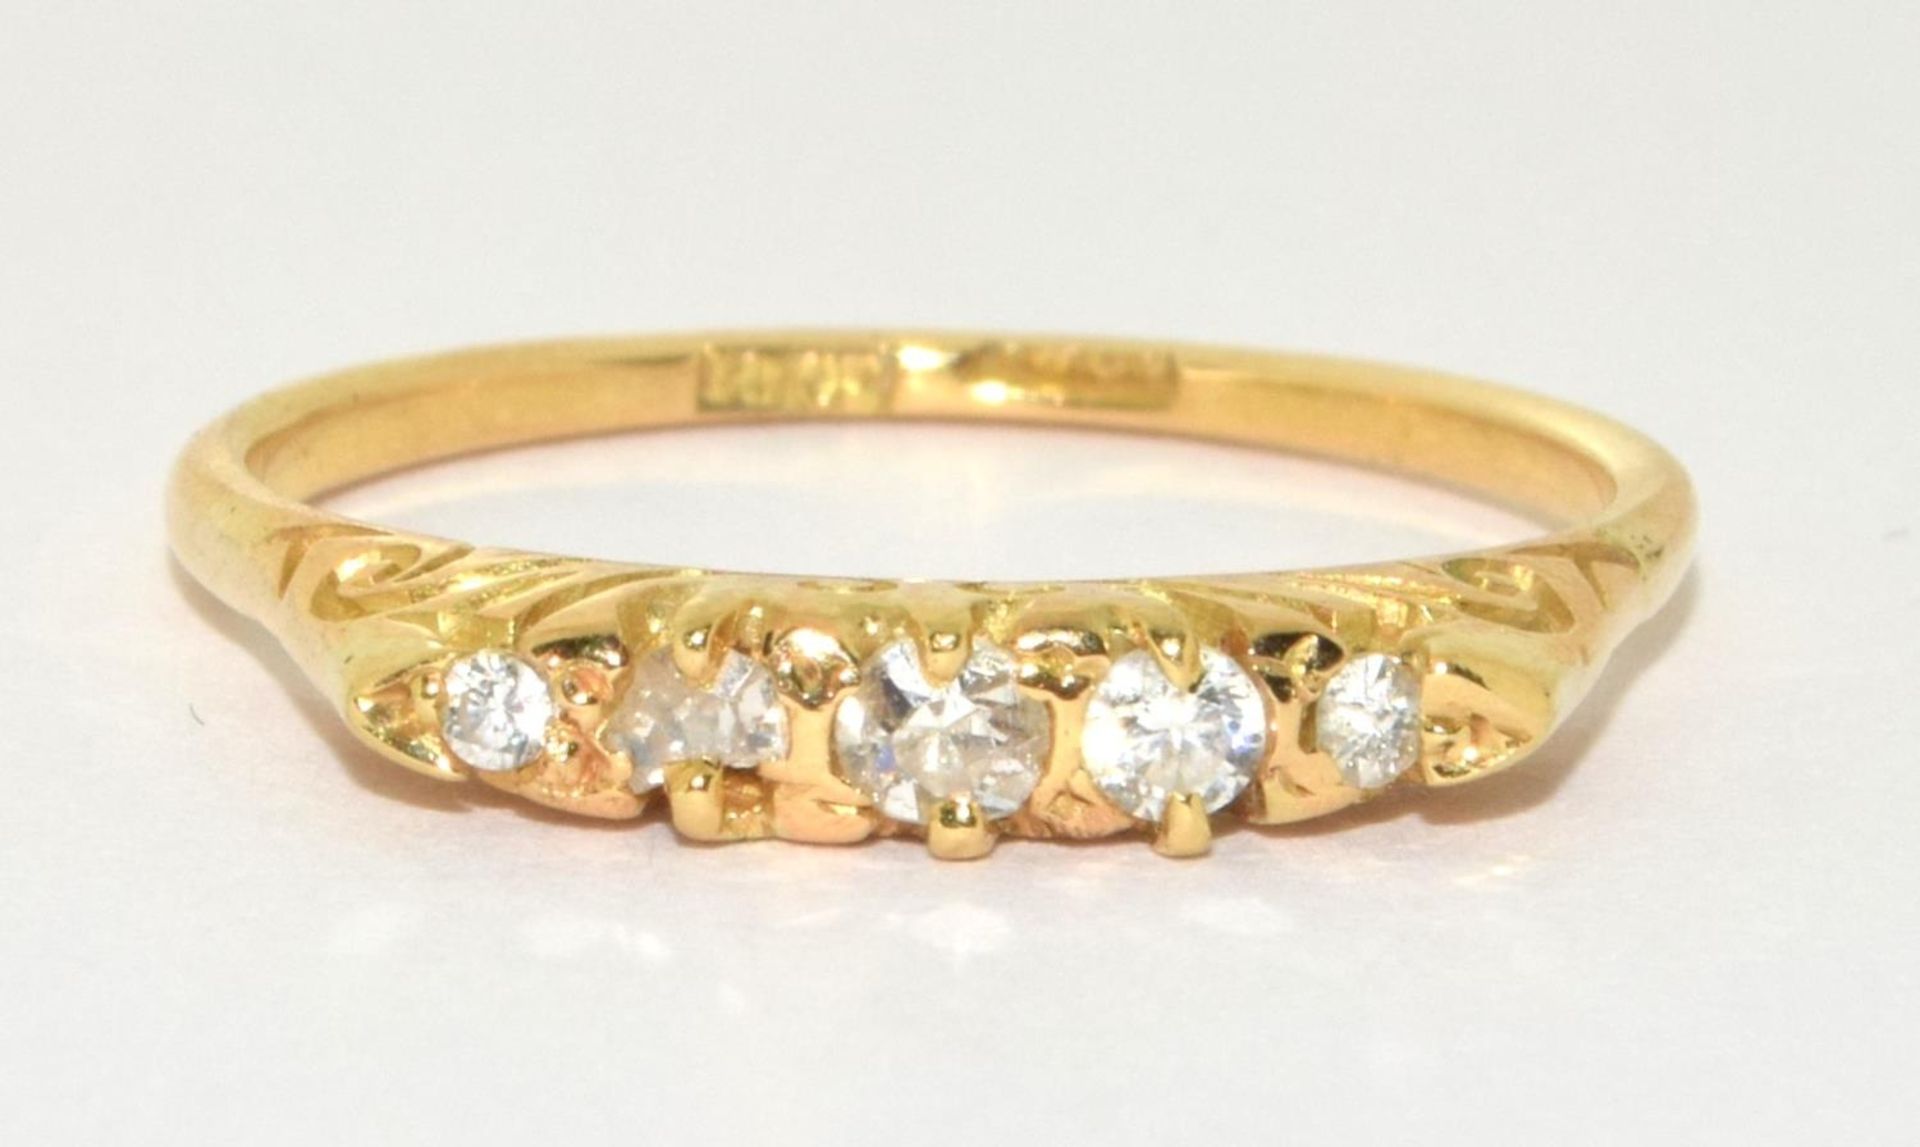 18ct gold antique set 5 stone ladies diamond ring 3g size N